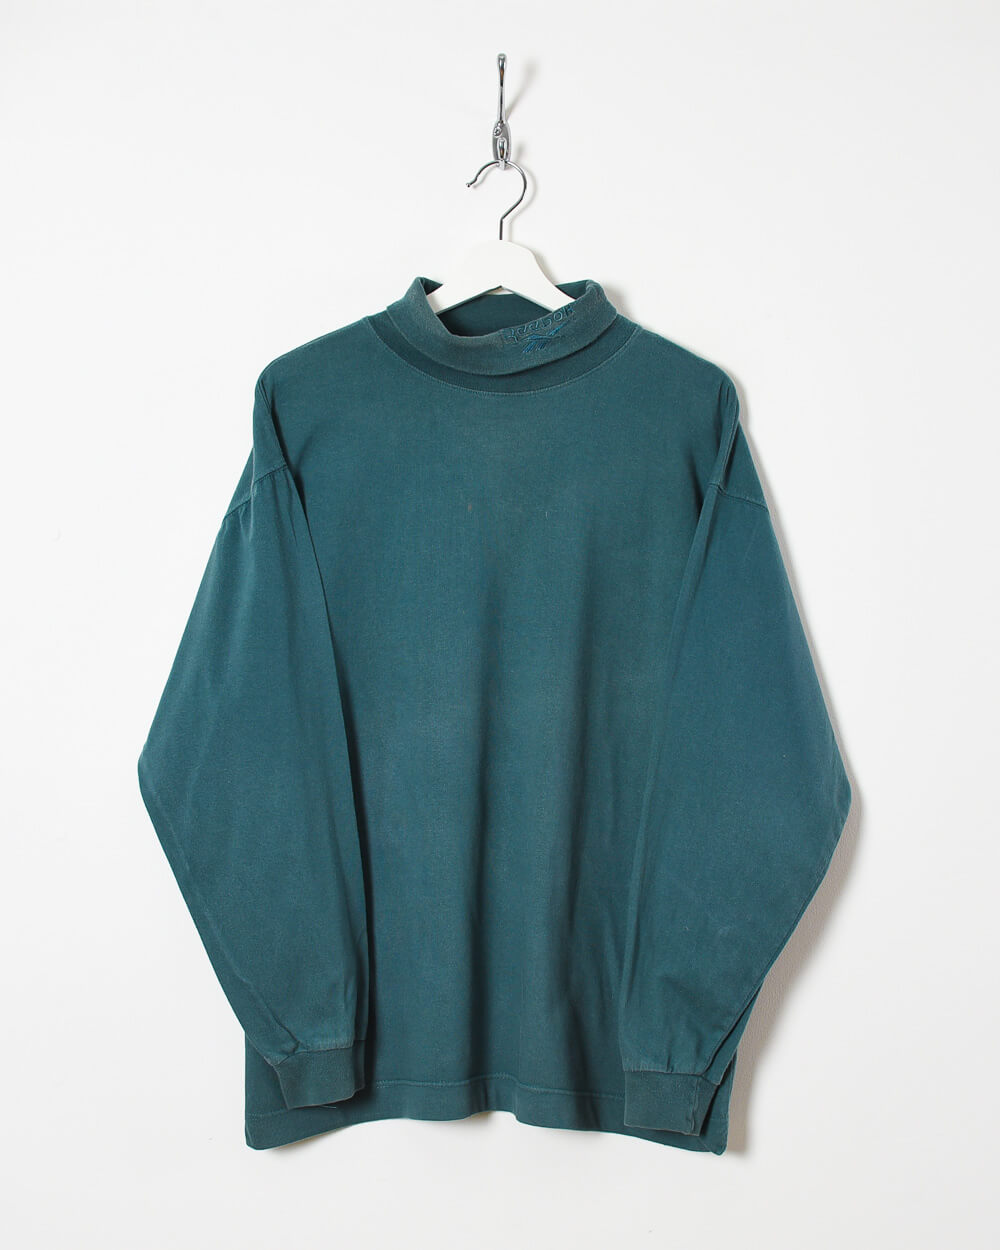 Reebok Turtle Neck Sweatshirt - Medium - Domno Vintage 90s, 80s, 00s Retro and Vintage Clothing 